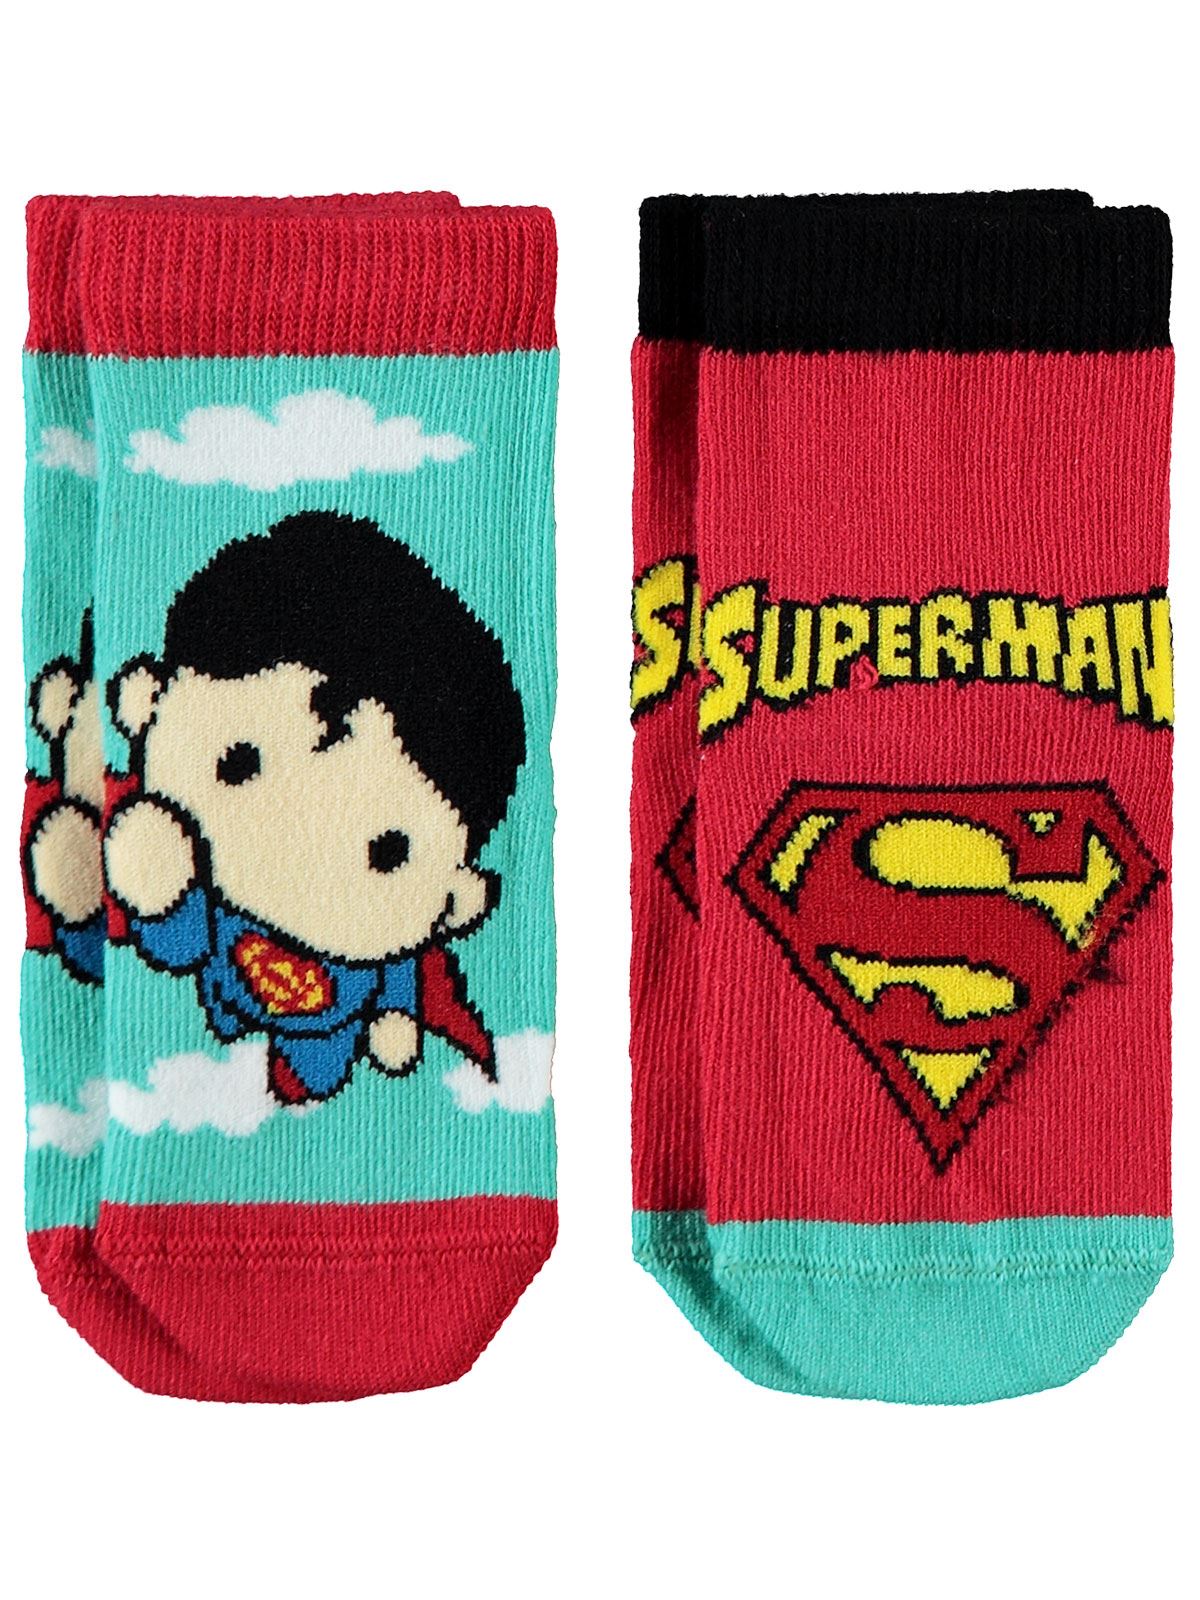 Süperman Erkek Bebek 2'li Çorap Set 0-24 Ay Kırmızı